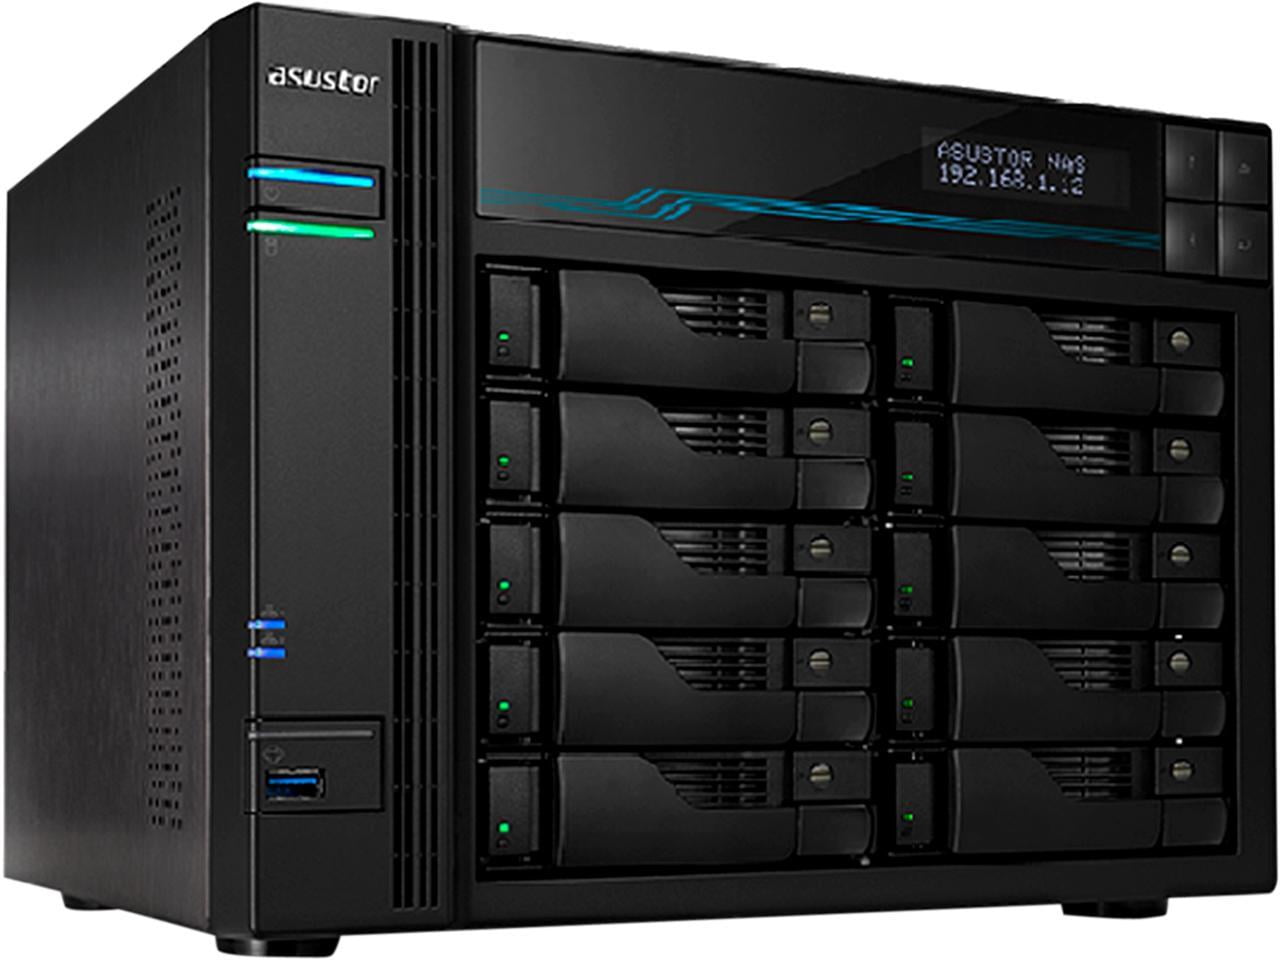 Asustor AS6510T 10 Bay Lockerstor 10 Desktop Enterprise NAS